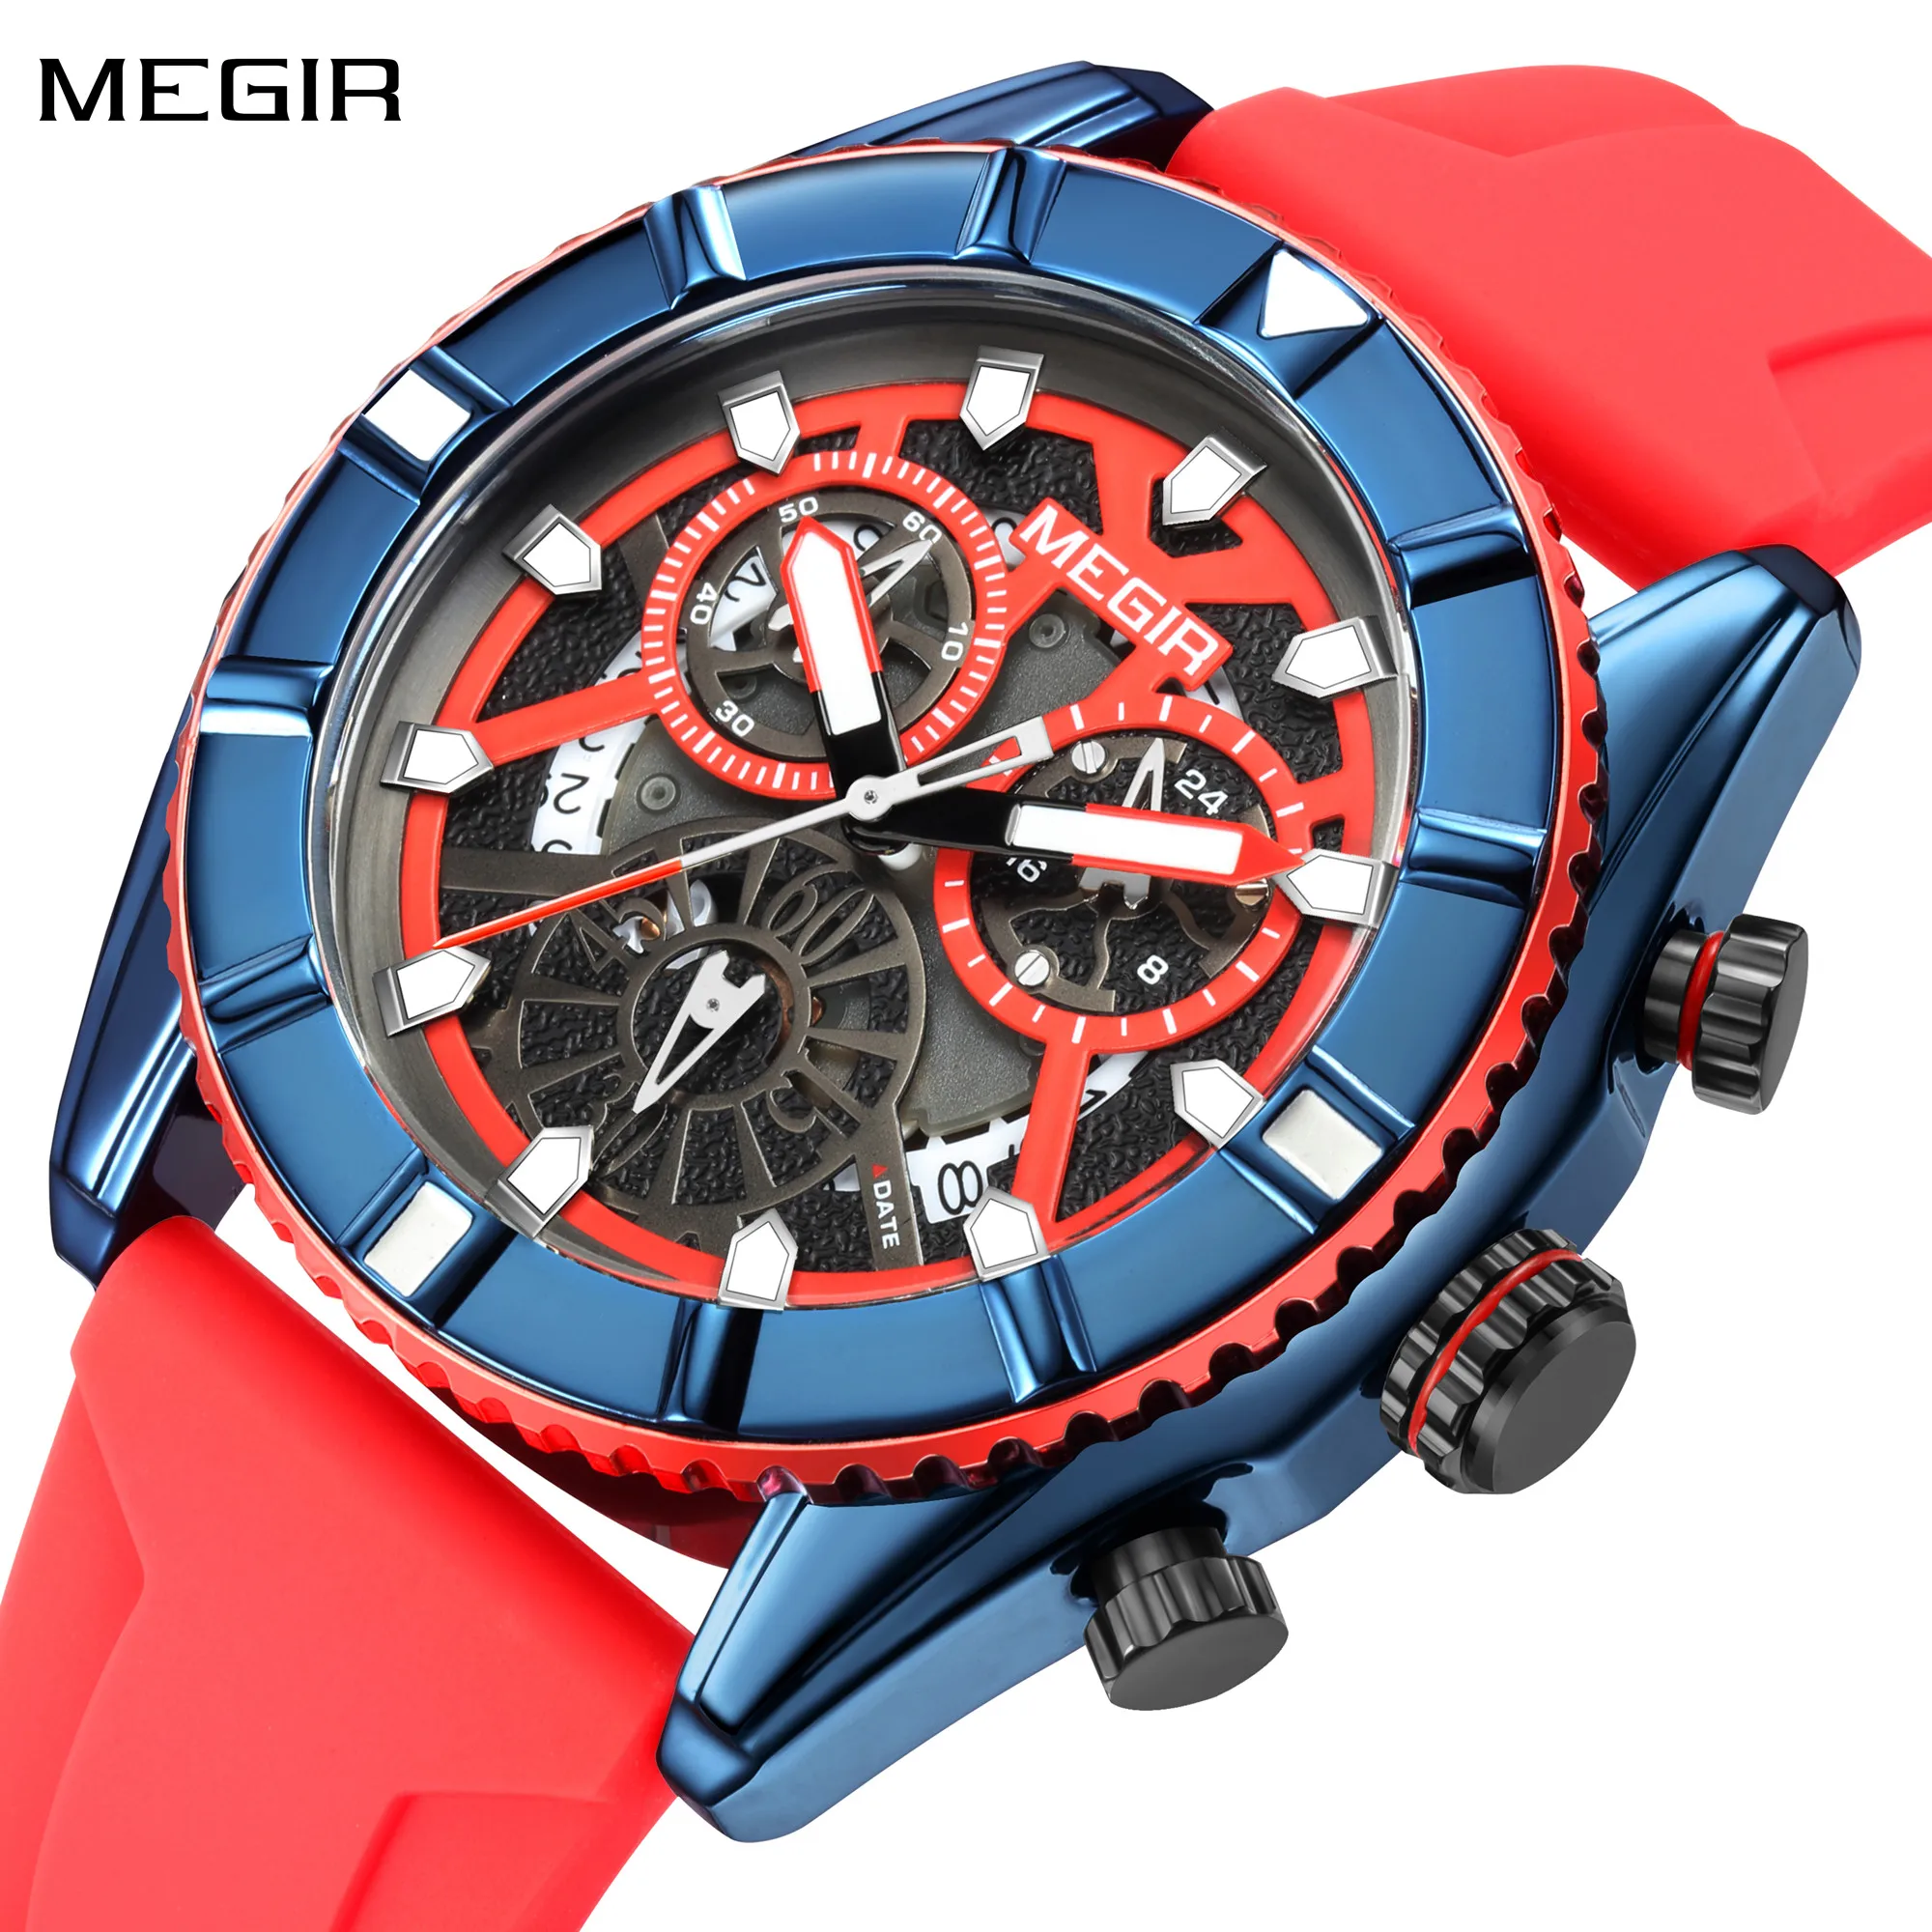 

MEGIR Men Watches Brand Luxury Sport Watch Quartz Clock Waterproof Luminous Chronograph Man Wristwatch Reloj Hombre 2209